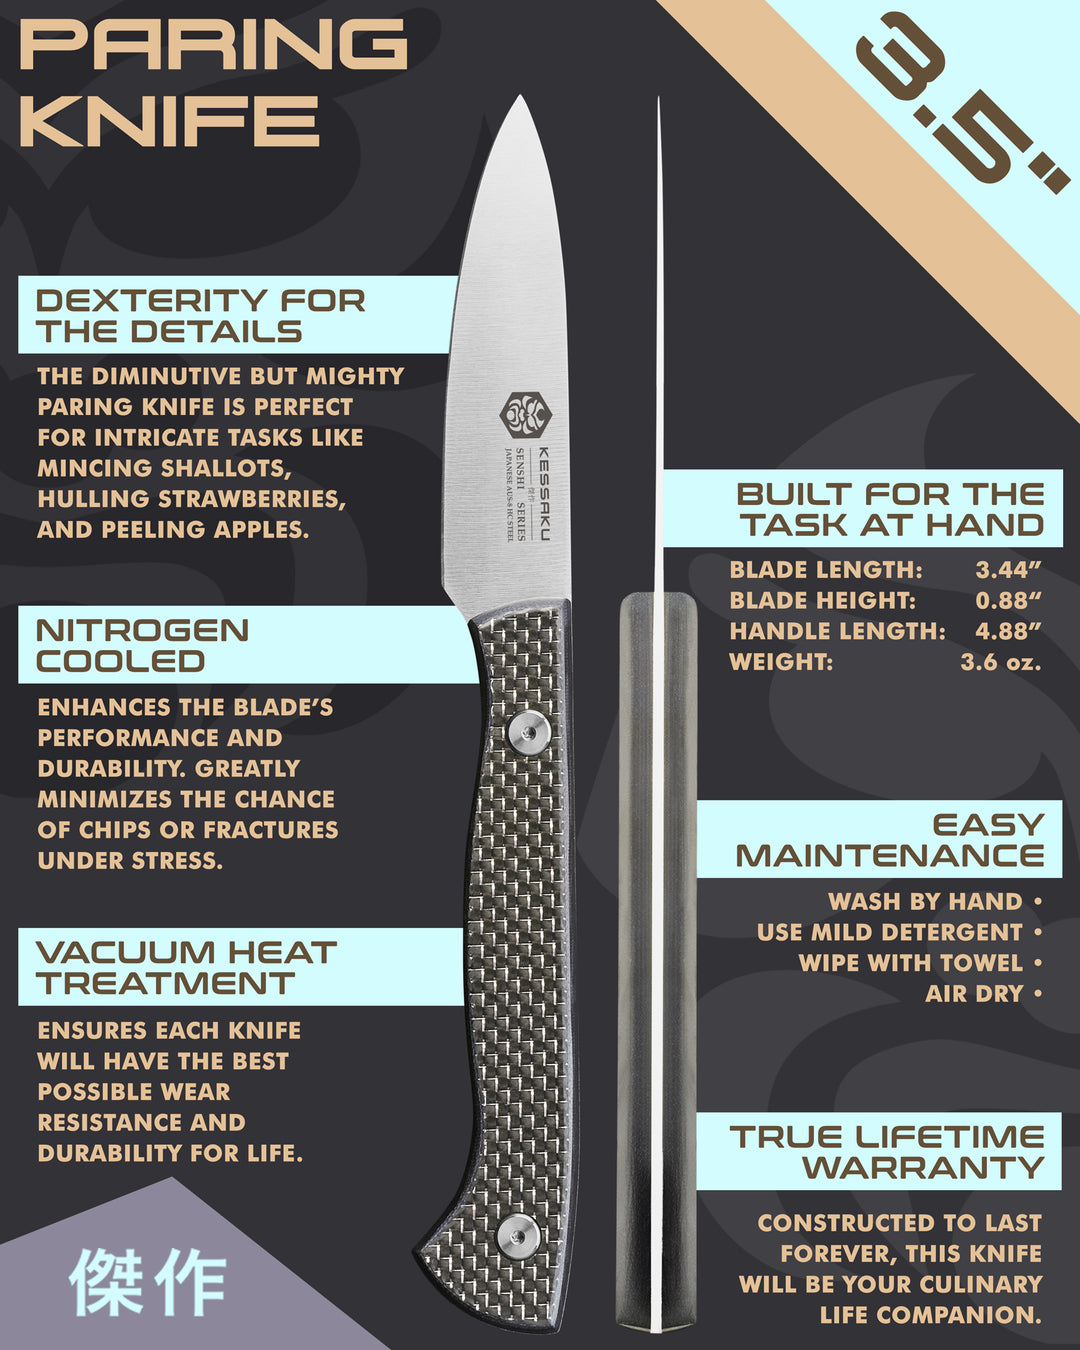 Kessaku Senshi Paring Knife uses, dimensions, maintenance, warranty info, and additional blade treatments